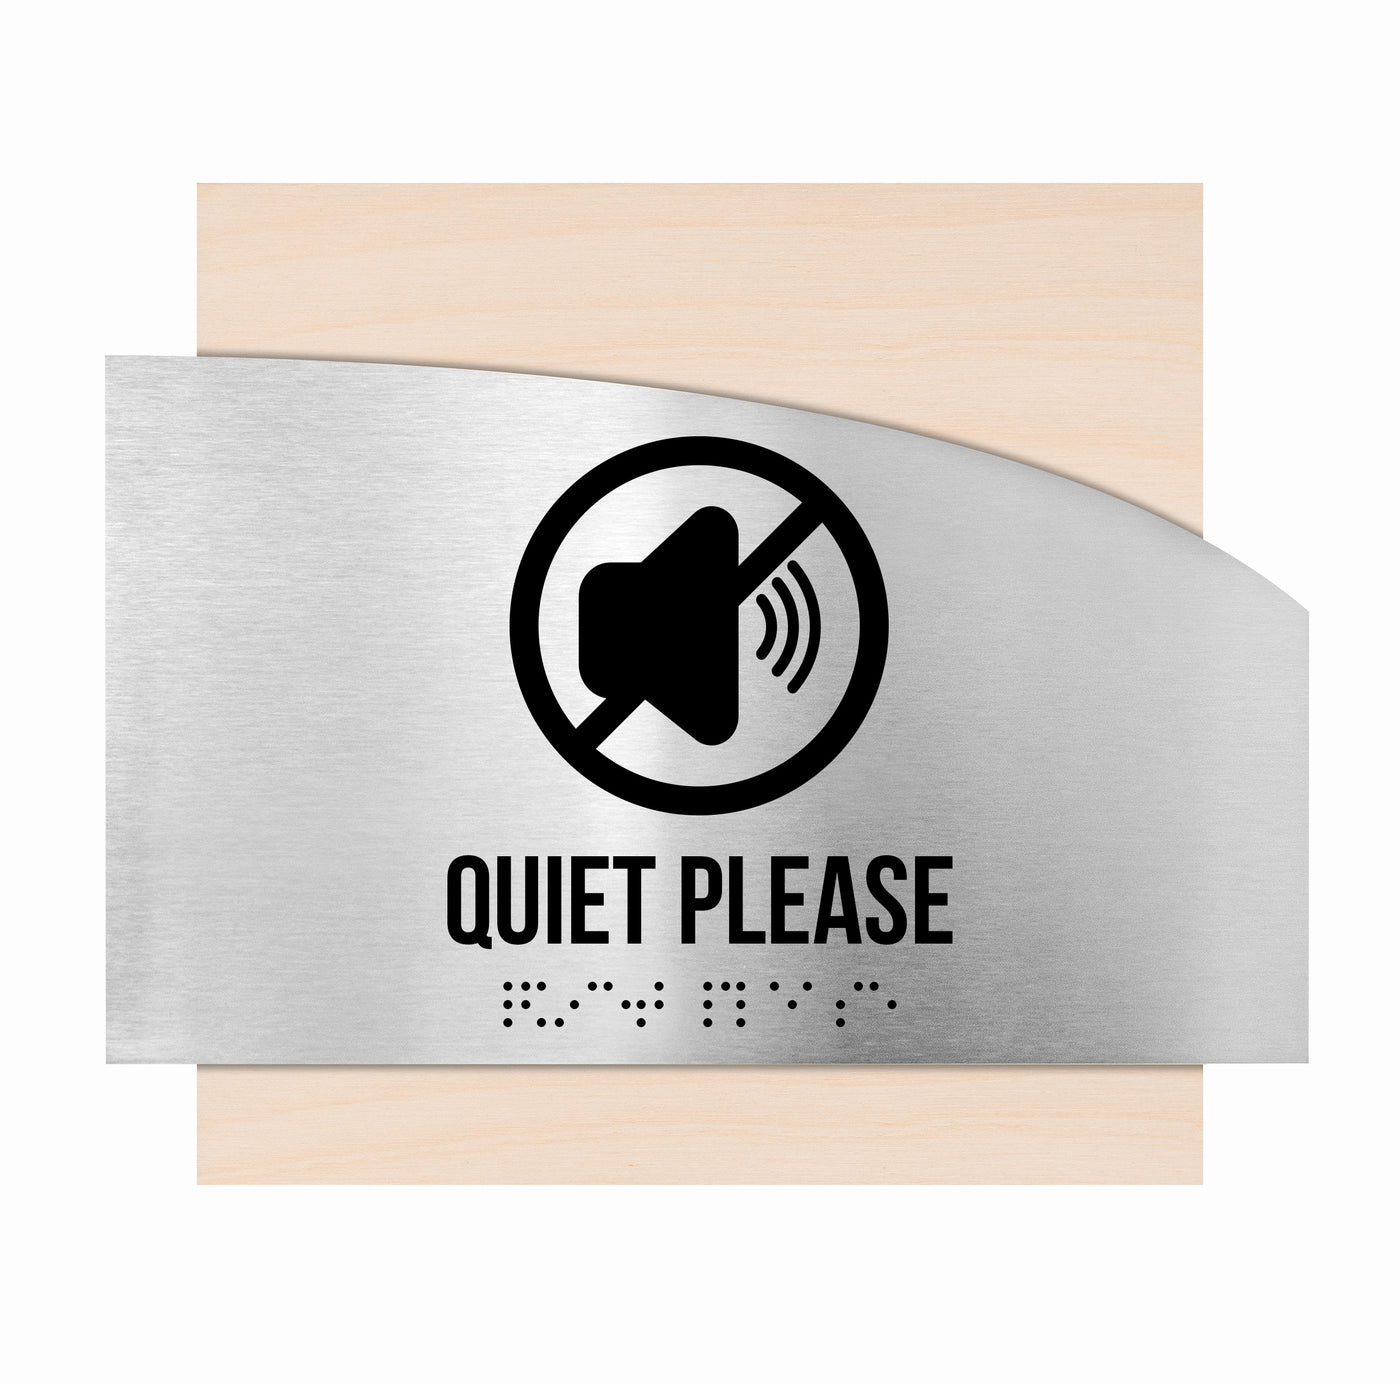 Information Signs - Quiet Please Sing Wood "Wave" Design